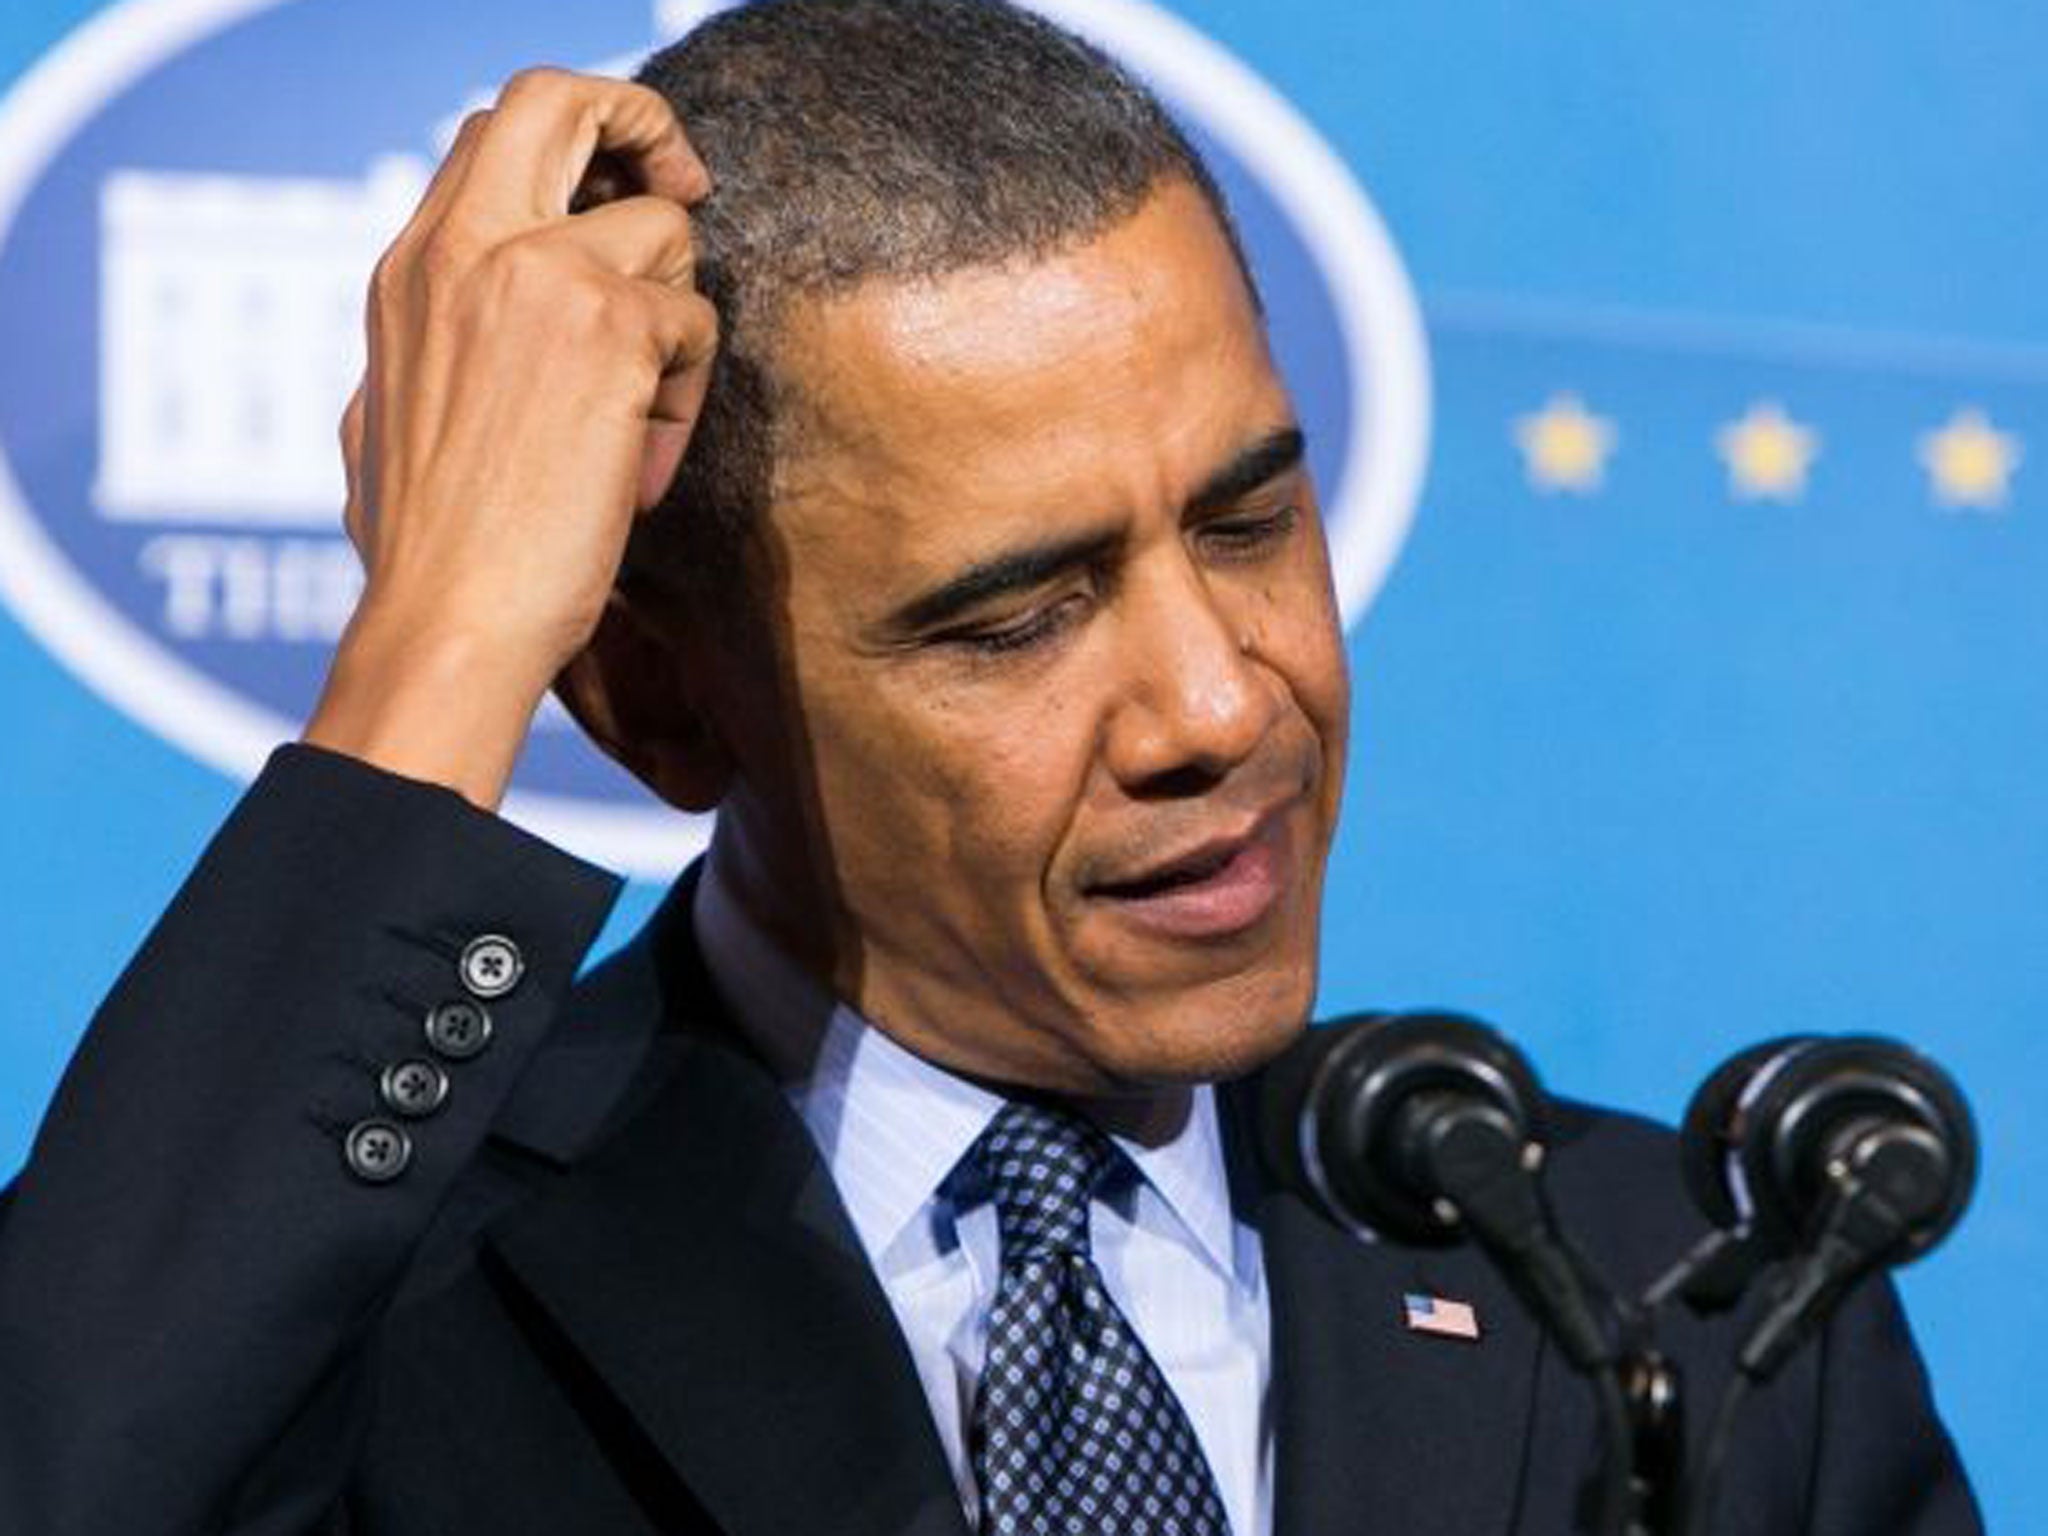 Barack Obama faces a Congressional backlash over TPP